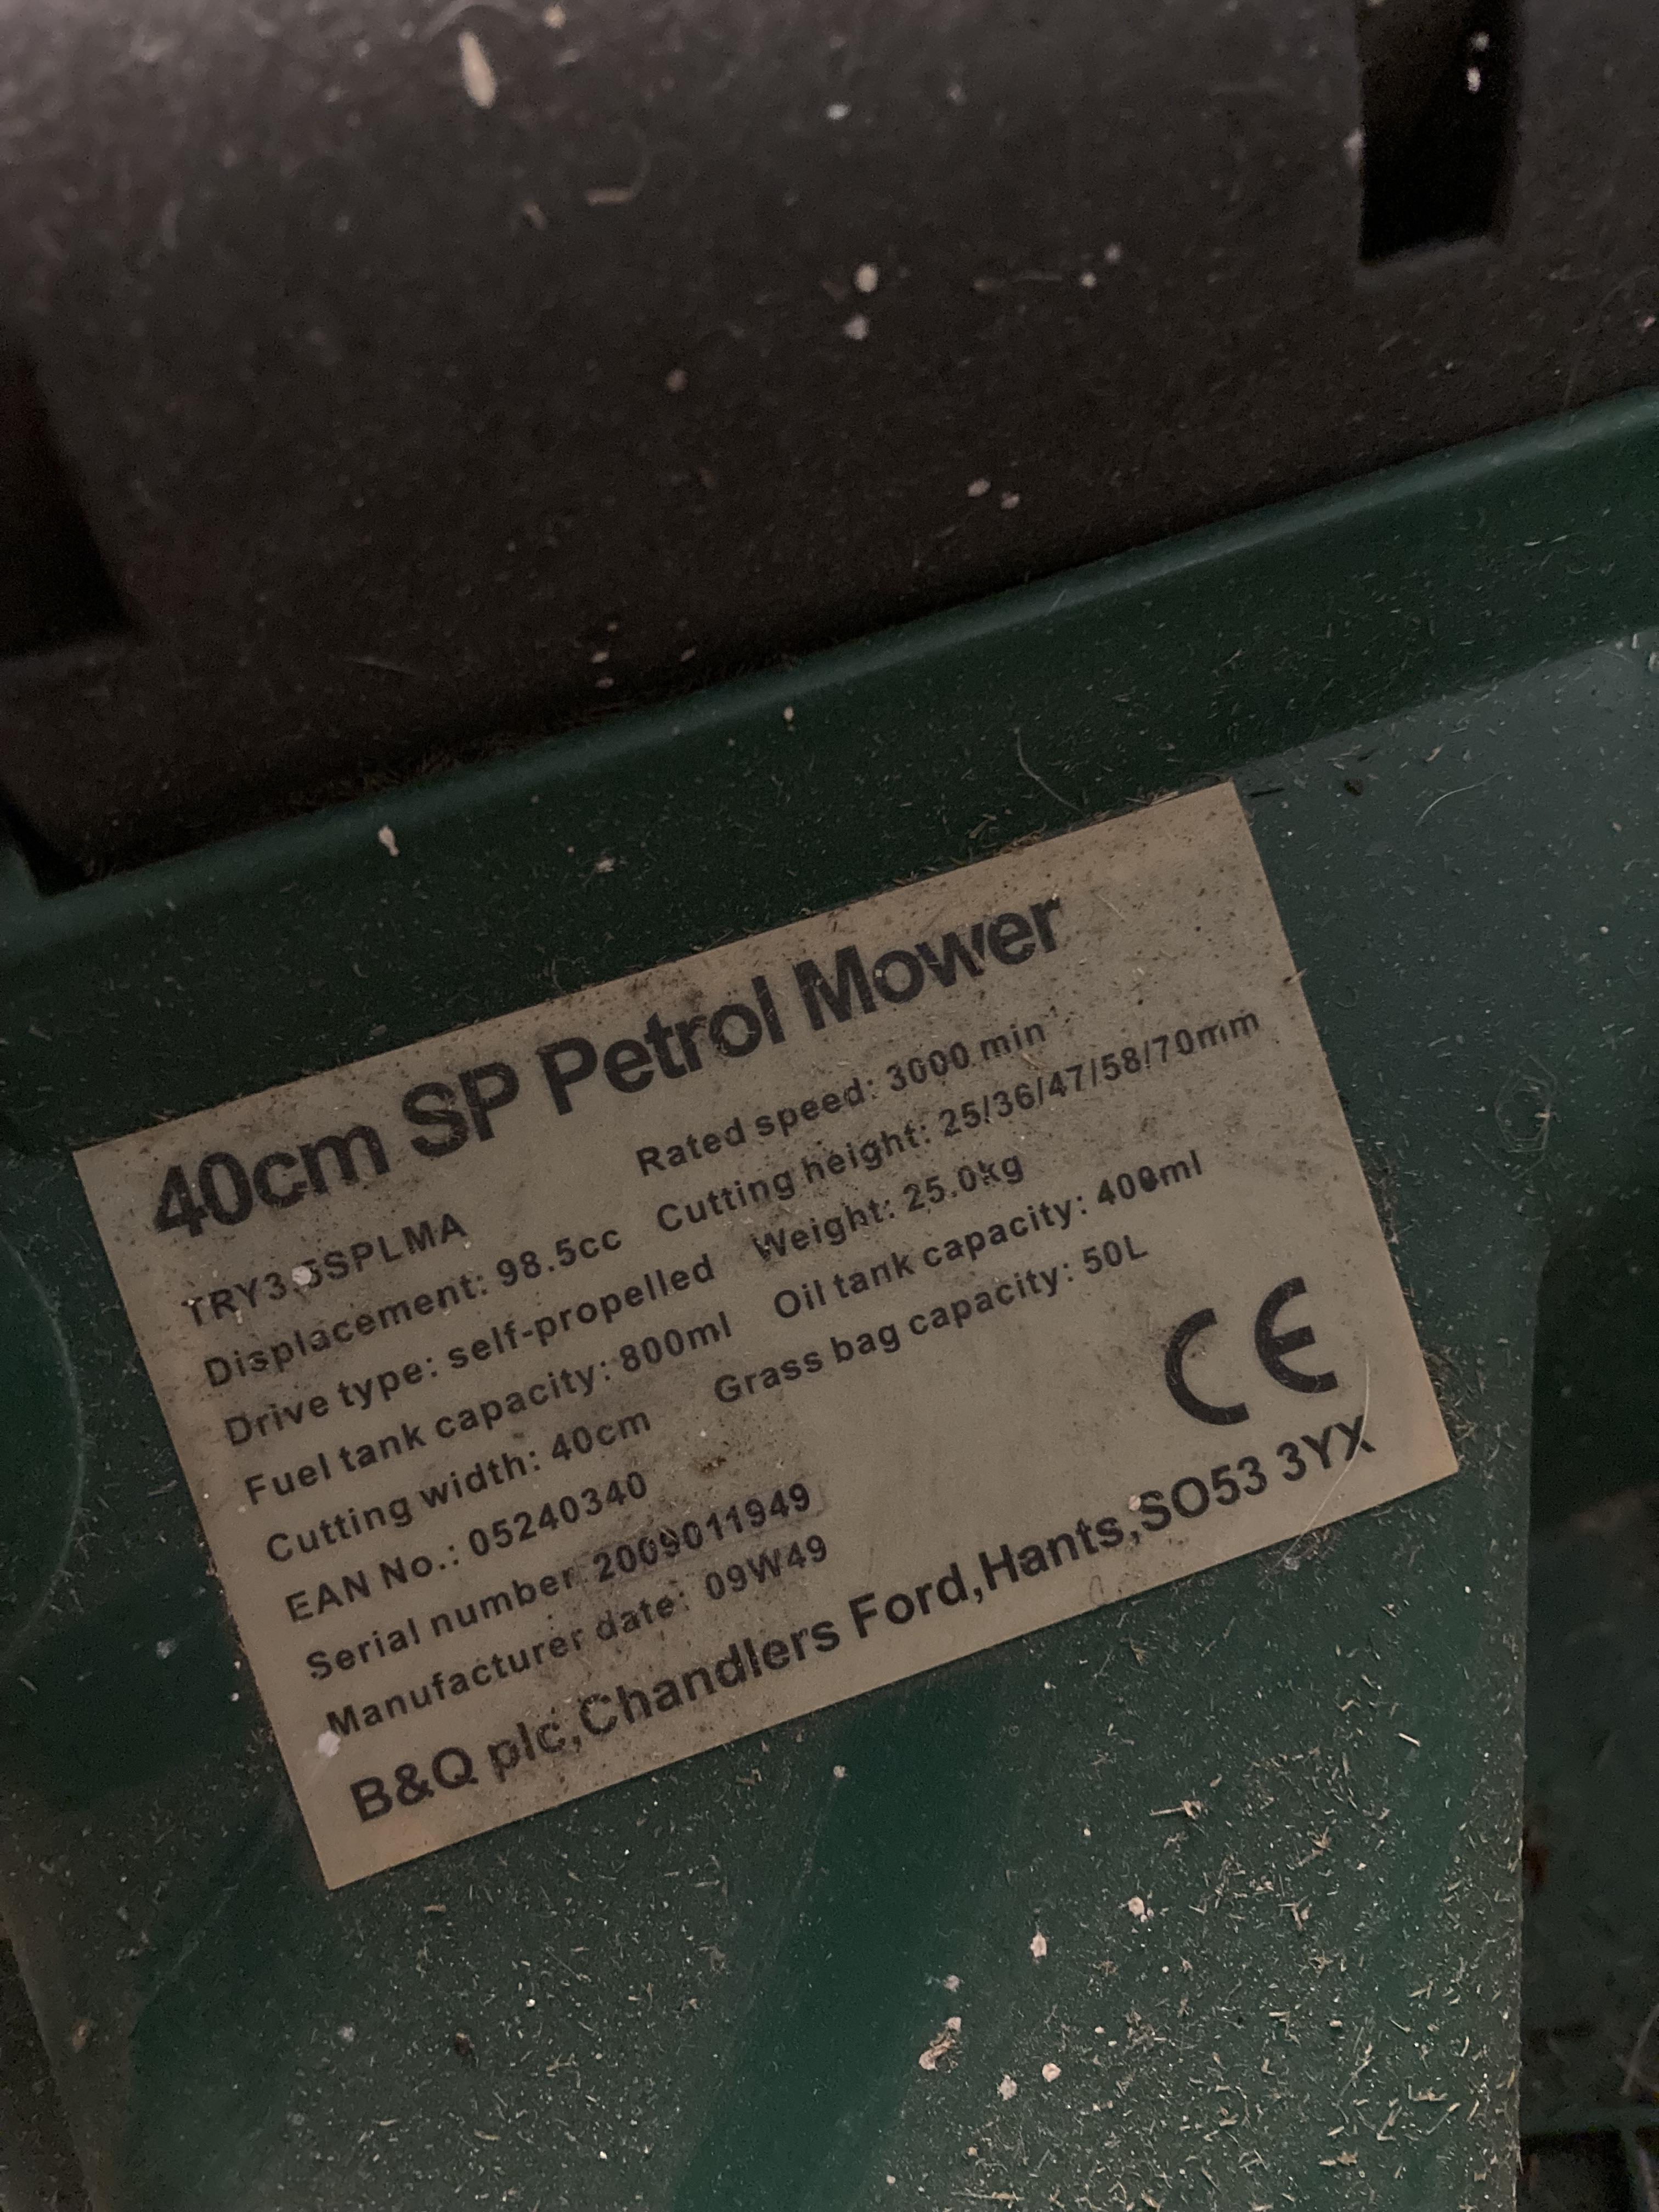 B&Q SP 40cm petrol lawnmower with collection box (saleroom location: PO) - Image 3 of 3